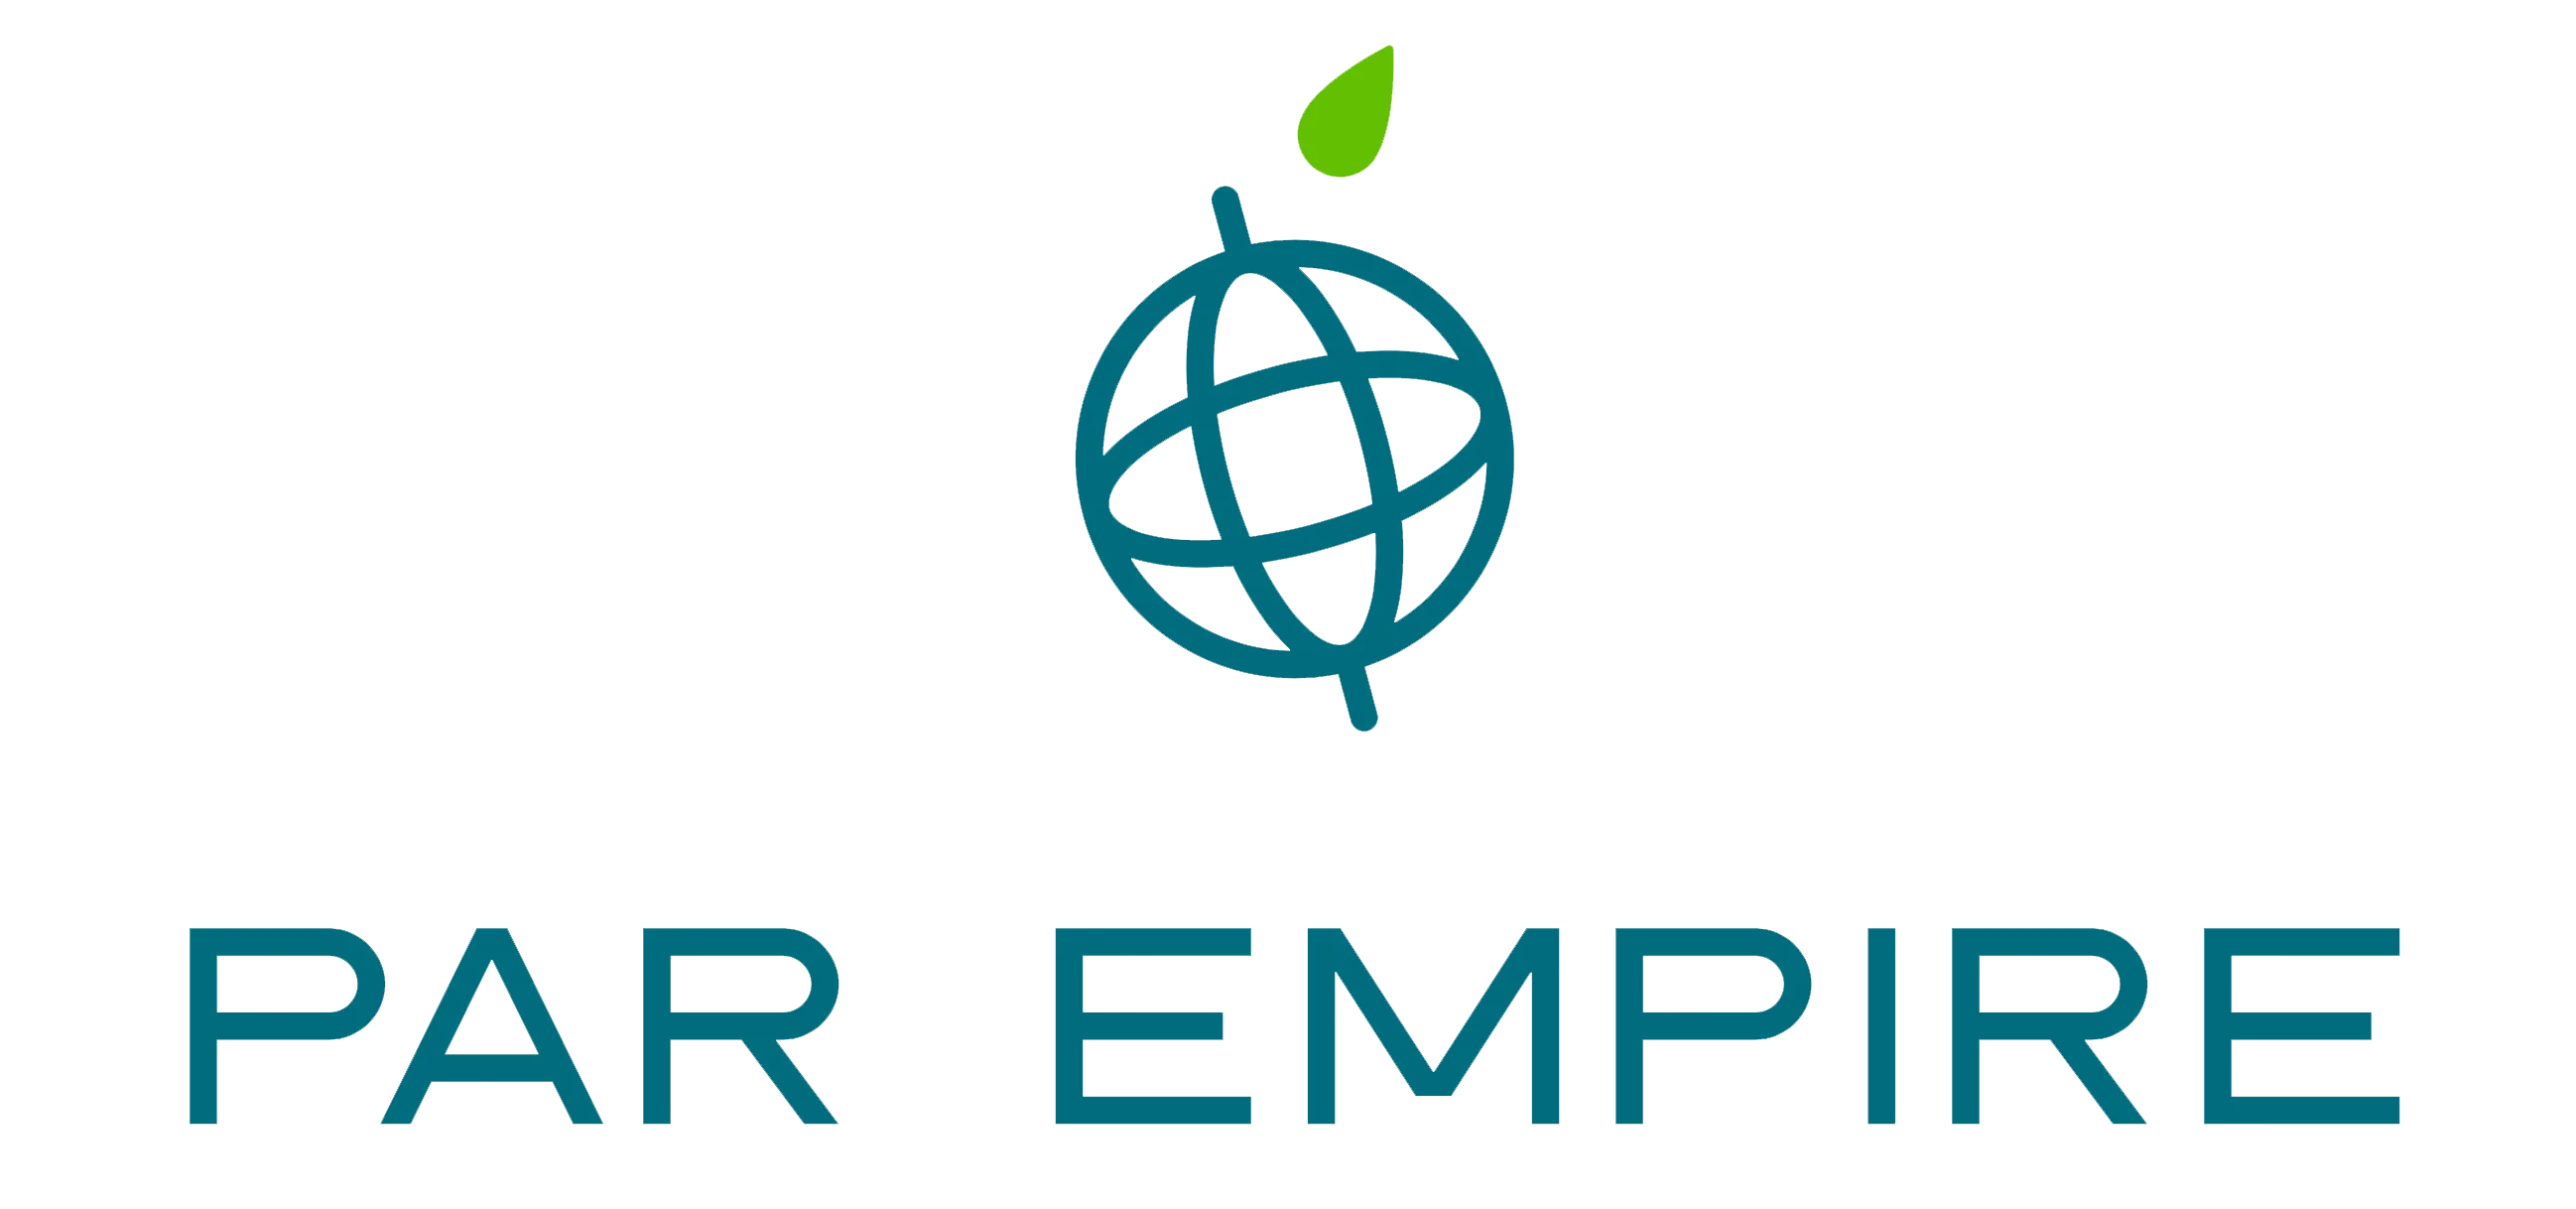 Par Empire General Trading LLC